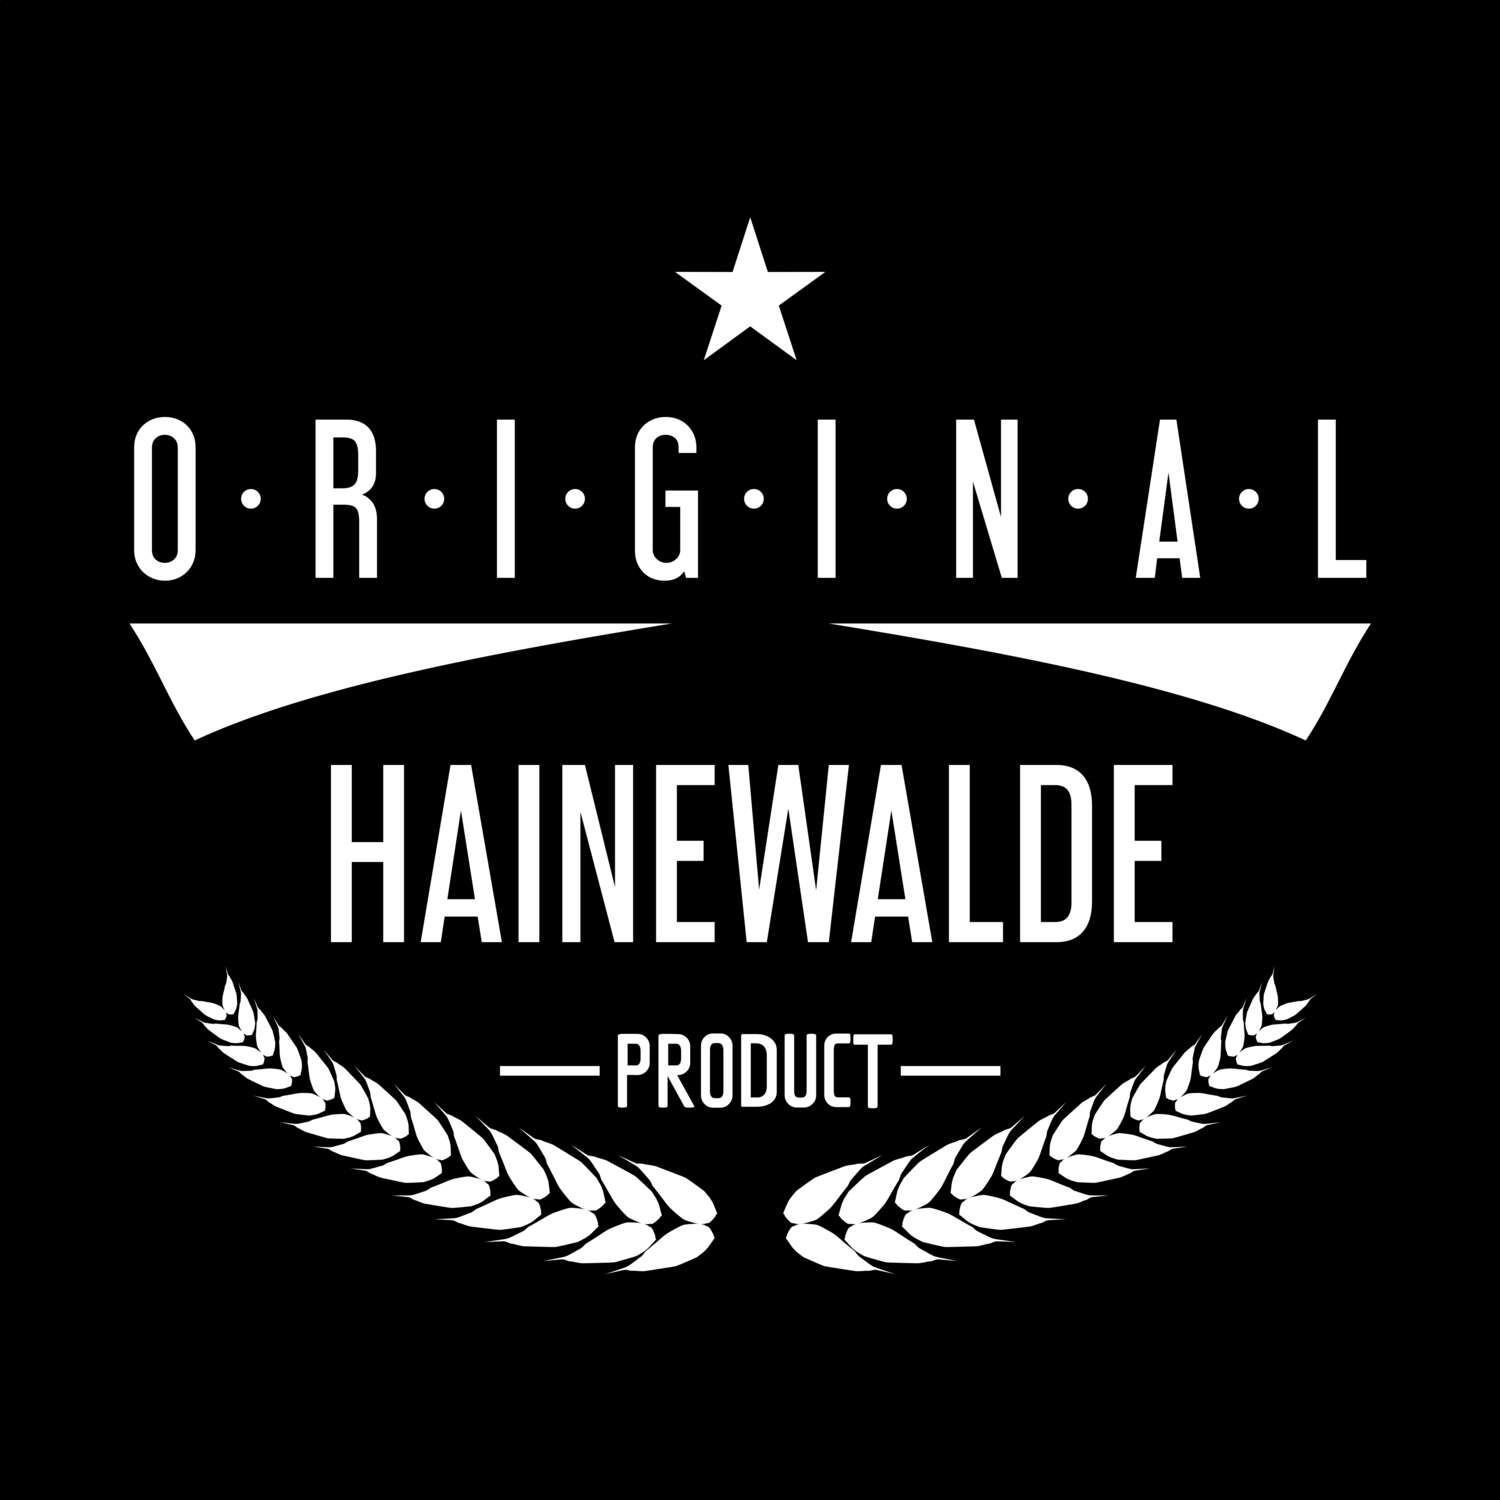 Hainewalde T-Shirt »Original Product«